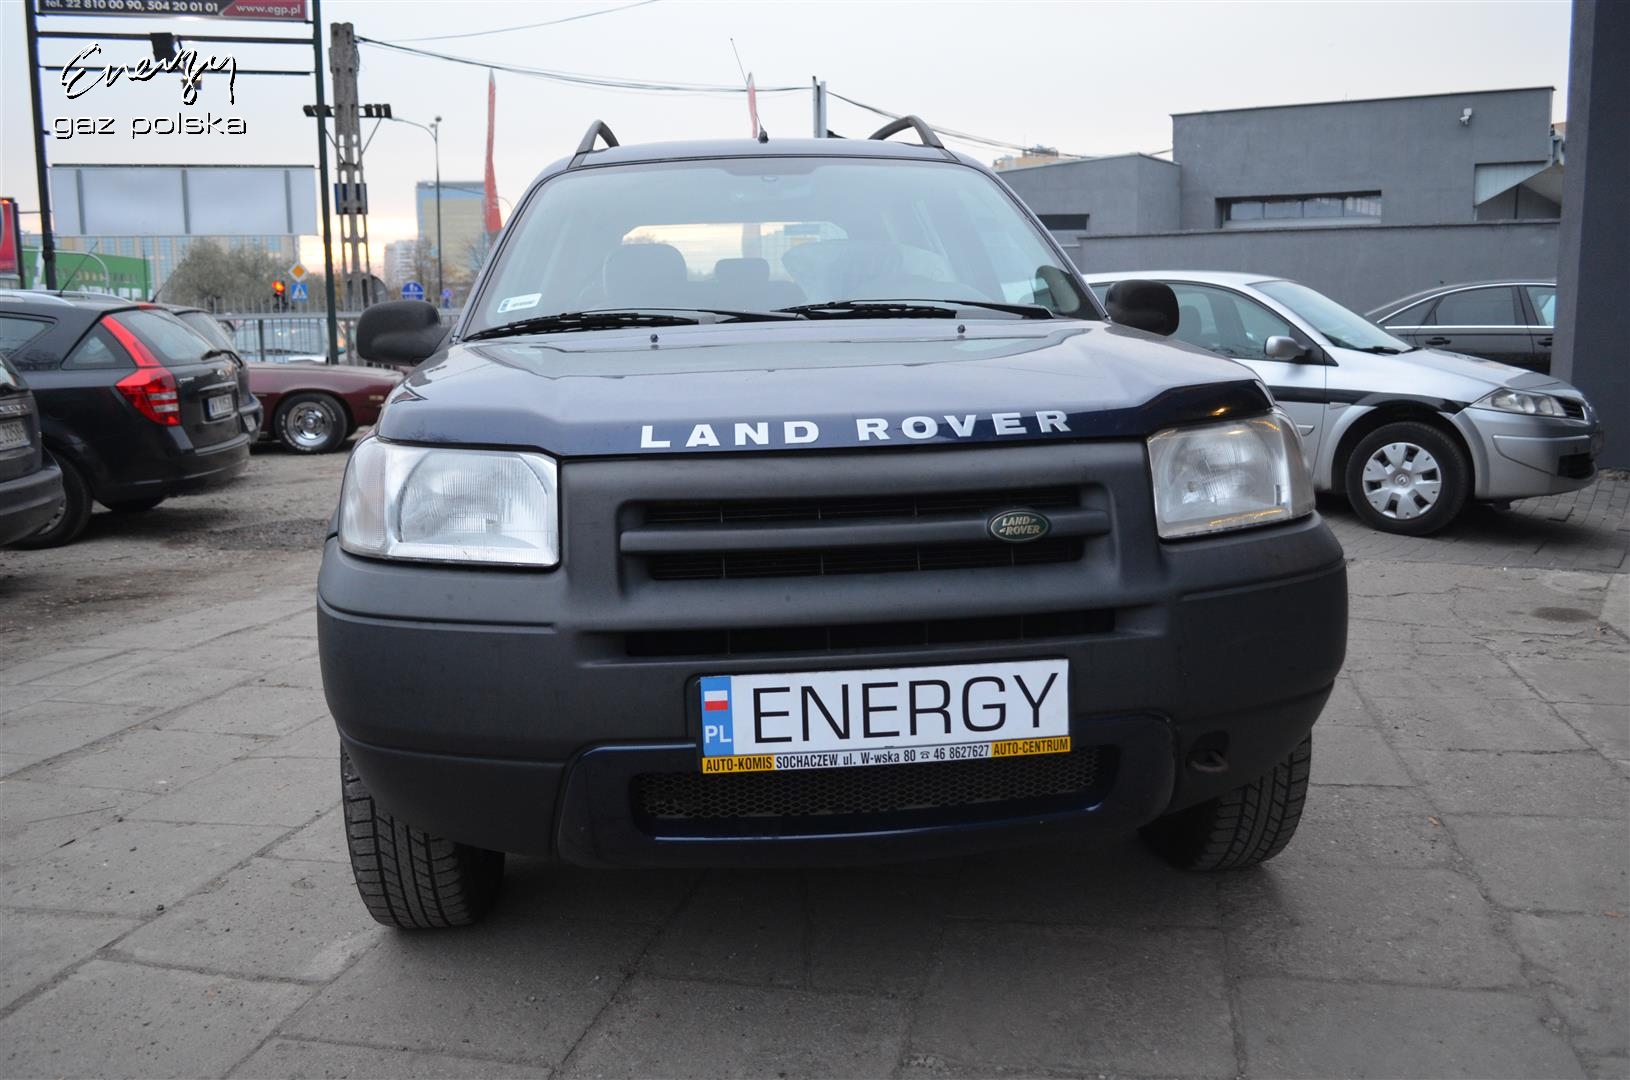 Galeria Lpg - Land Rover Freelander 1.8 2002R - Energy Gaz Polska - Montaż Auto Gaz